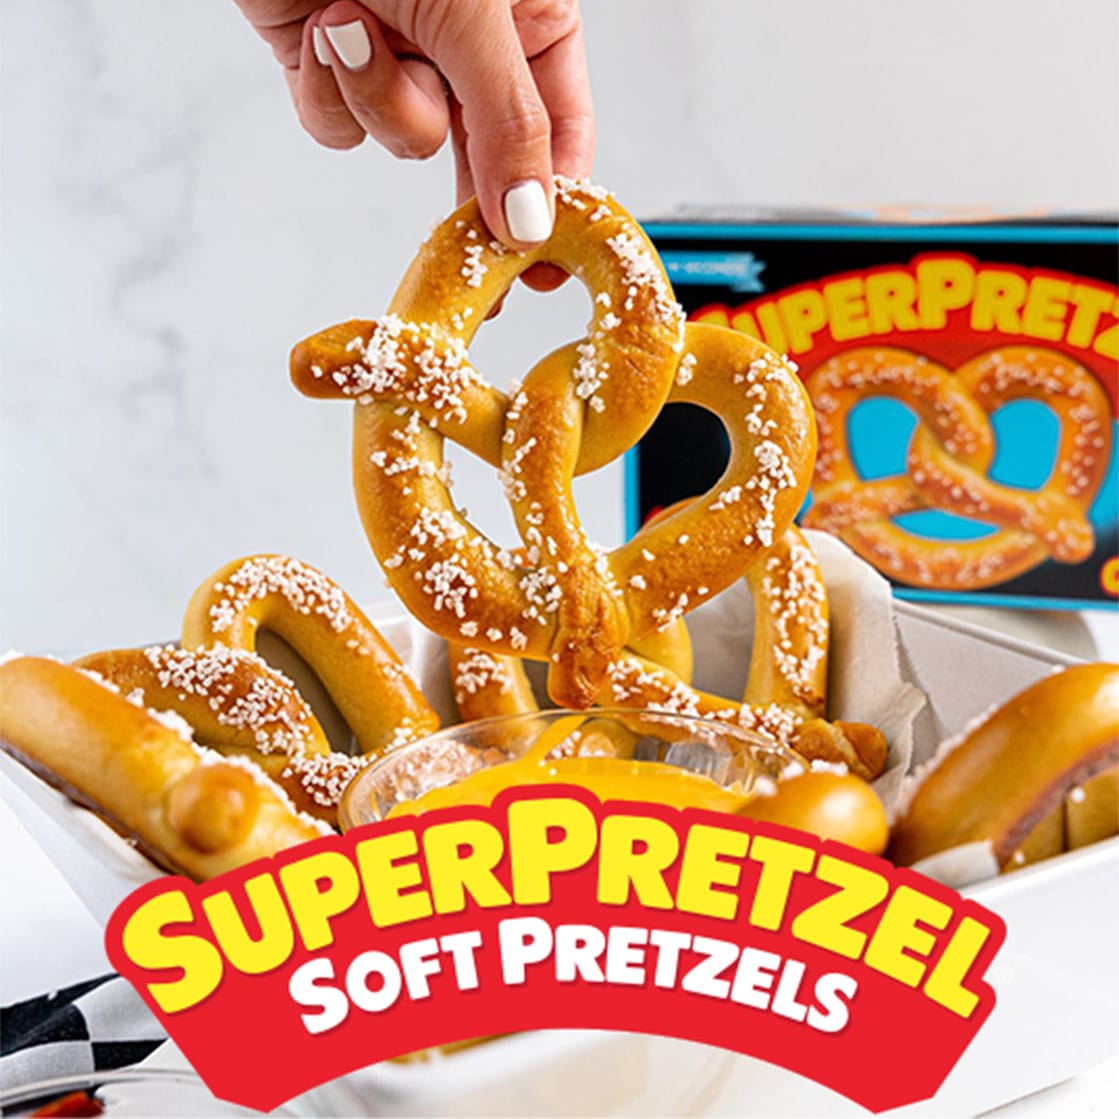 Super pretzels baked from wholesale distributor transcold distribution